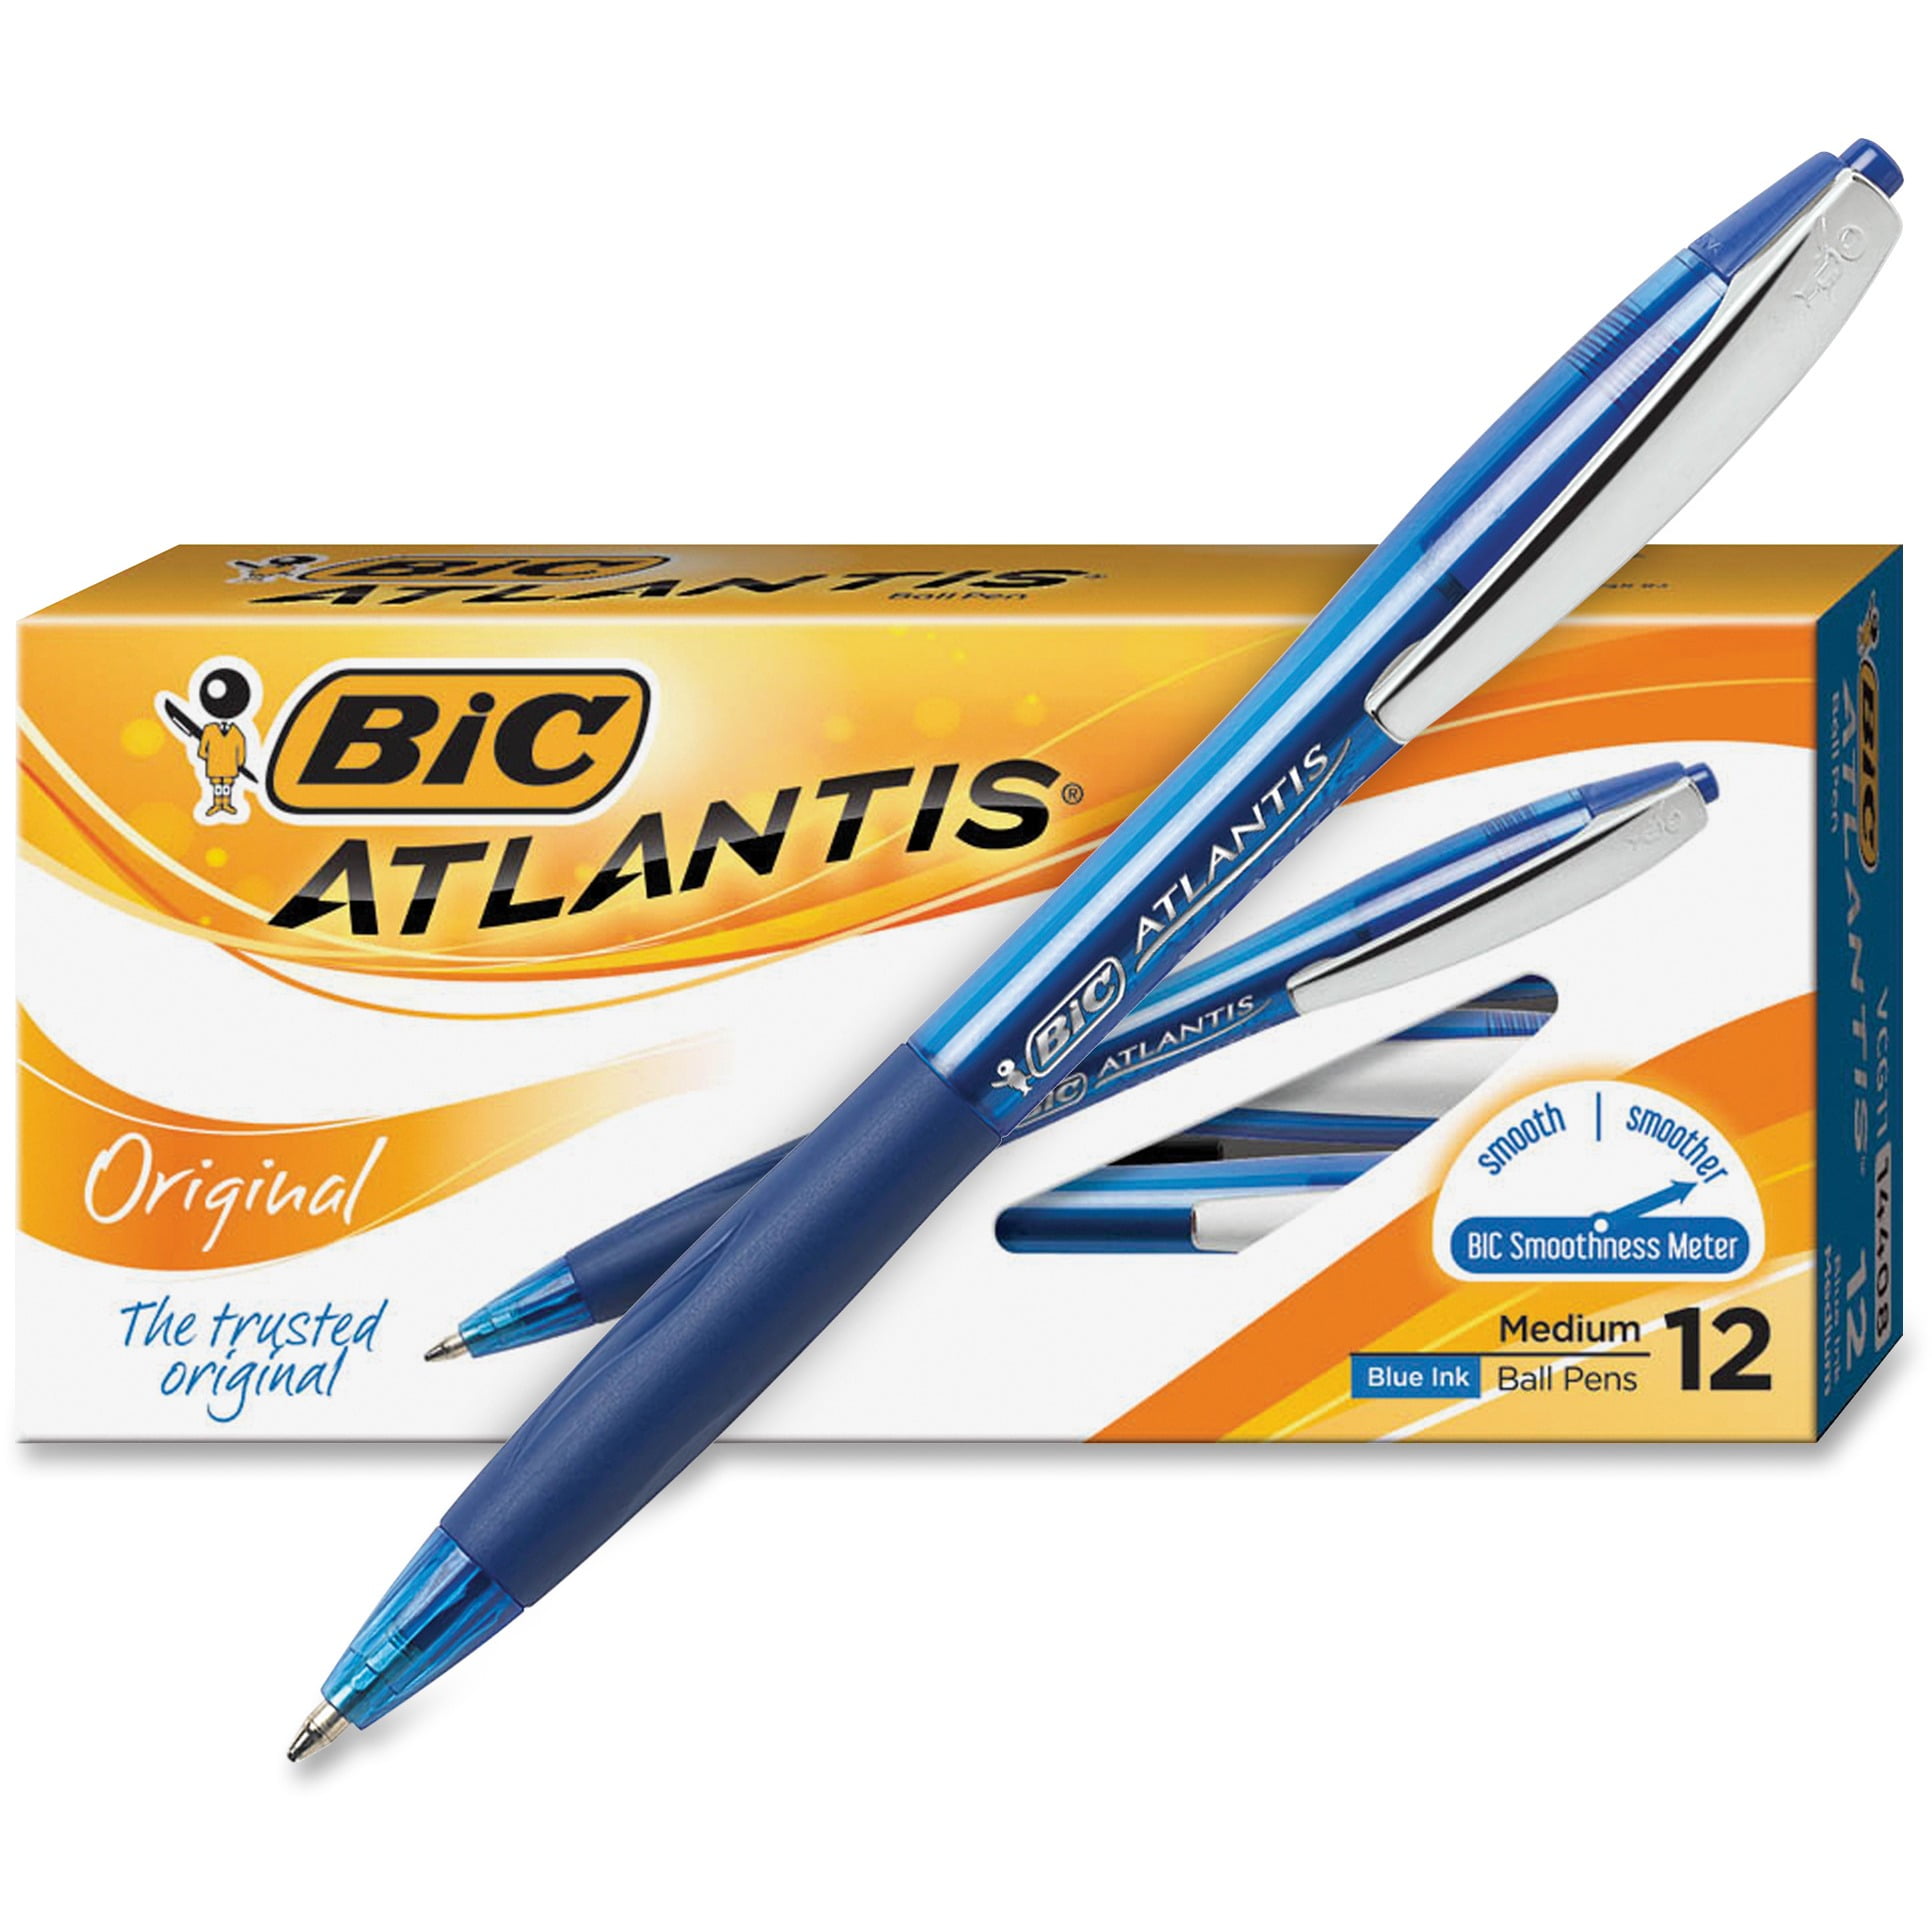 Bic Atlantis Retractable Comfort Ballpoint Pens Assorted Colors Medium 2 packs 